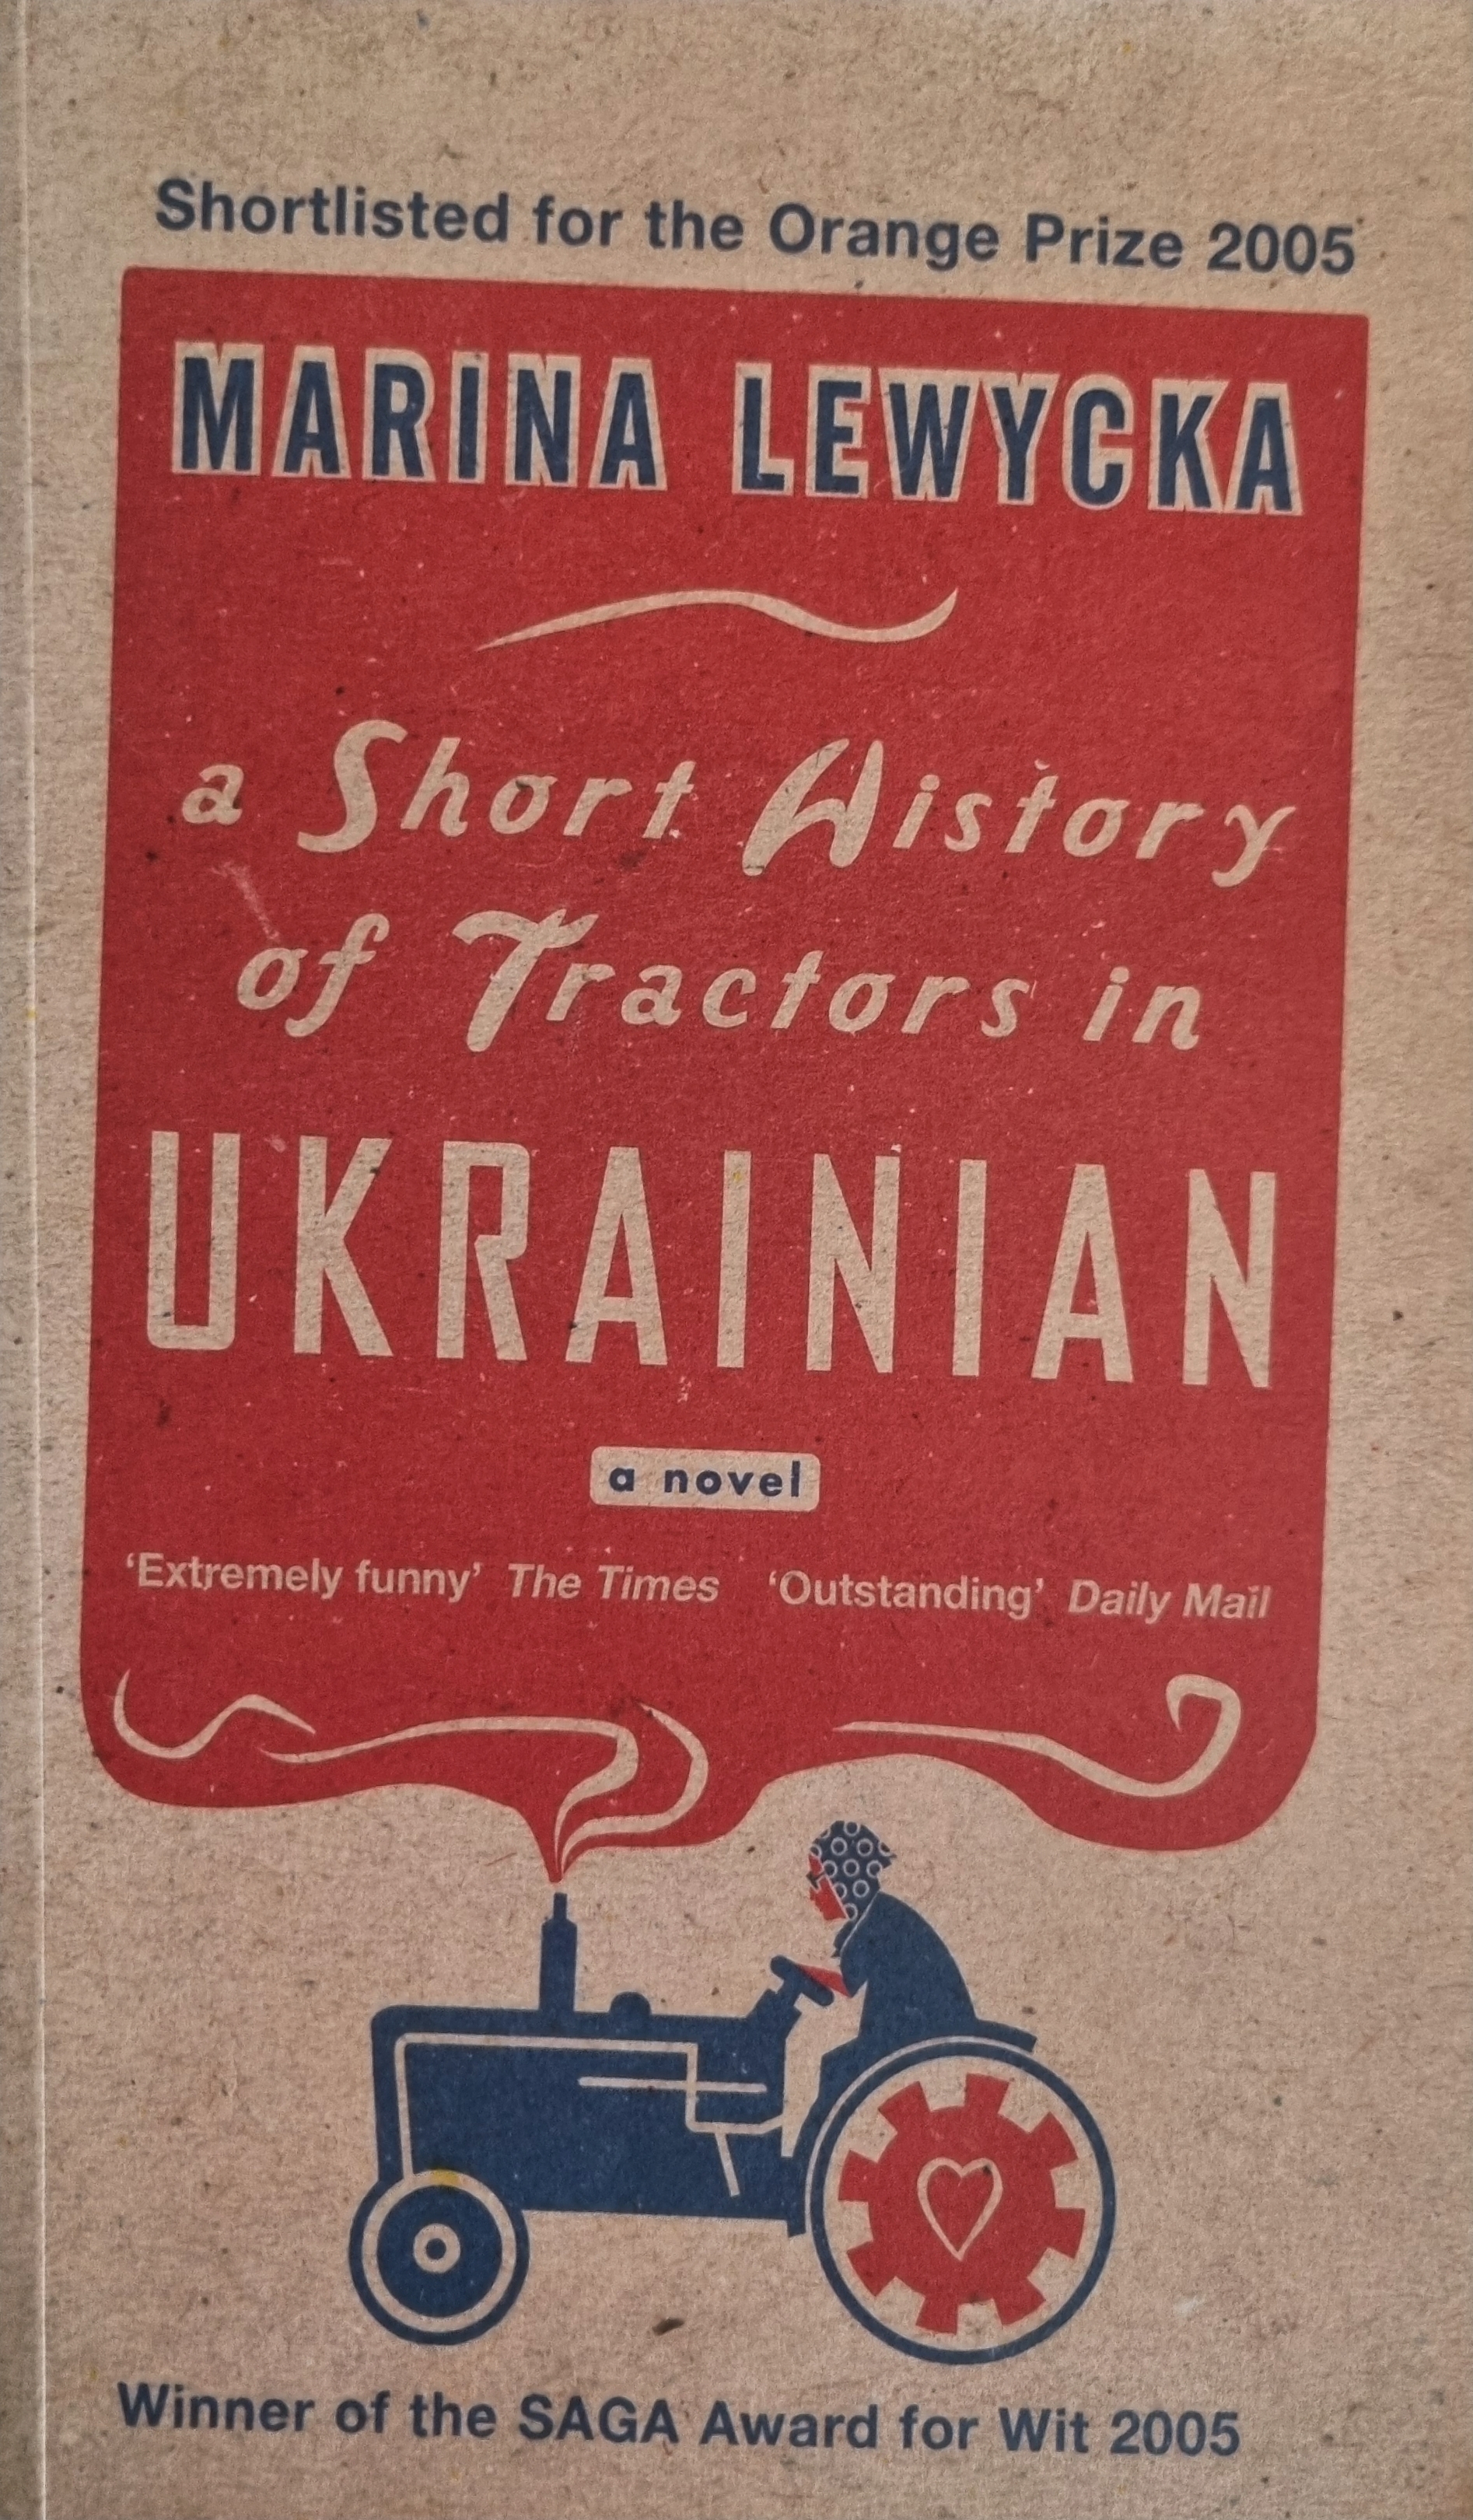 A short history of tractors in Ukrainian